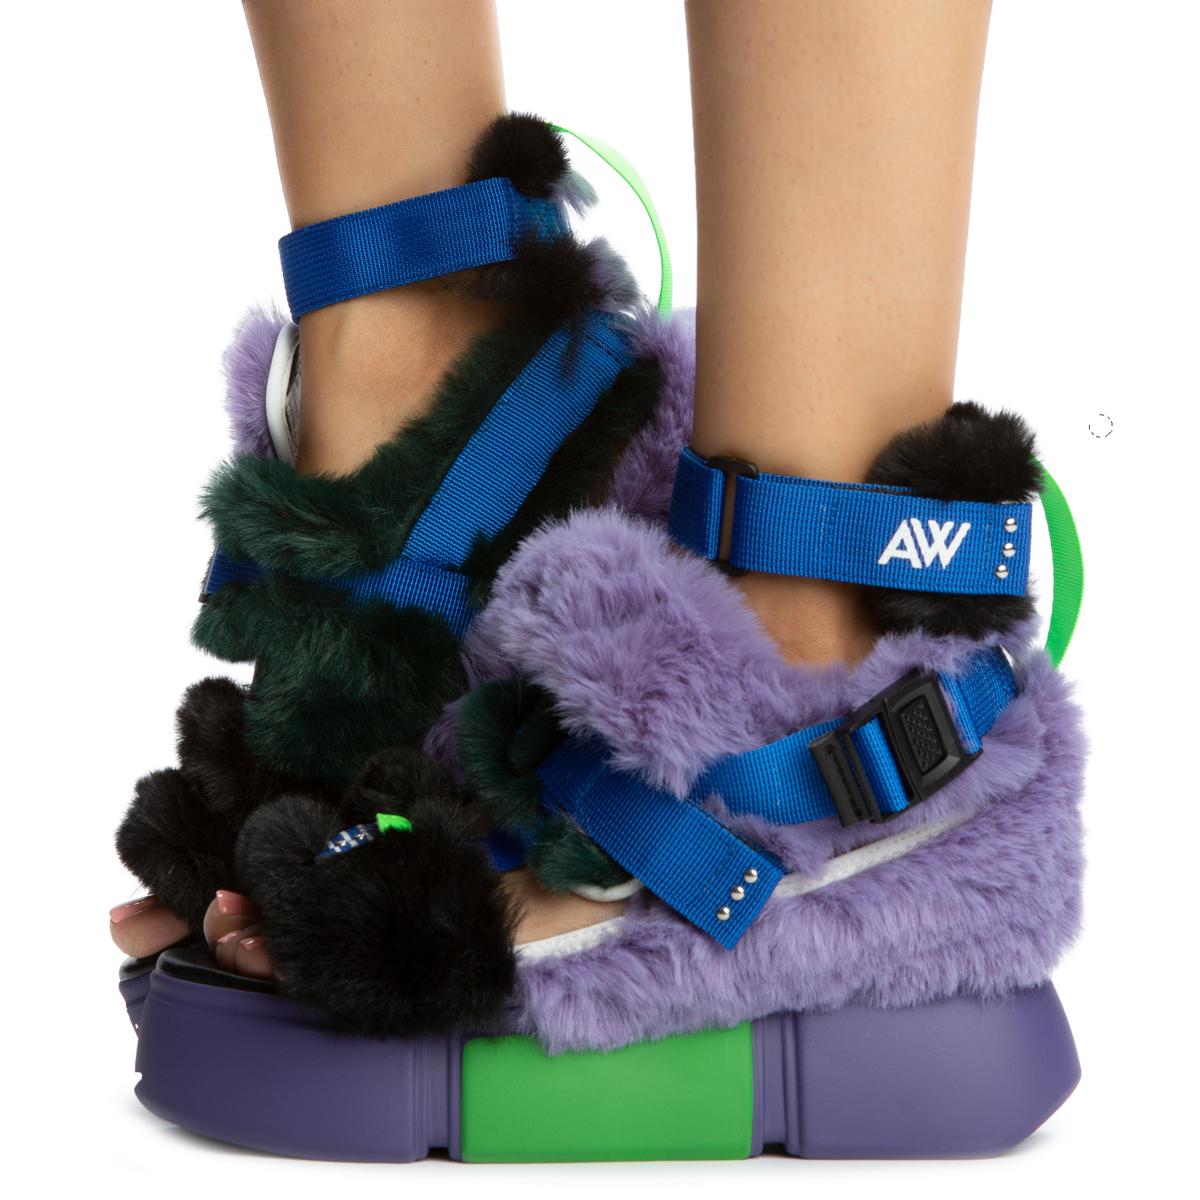 Cranberry-14 Fur Platform Sandals